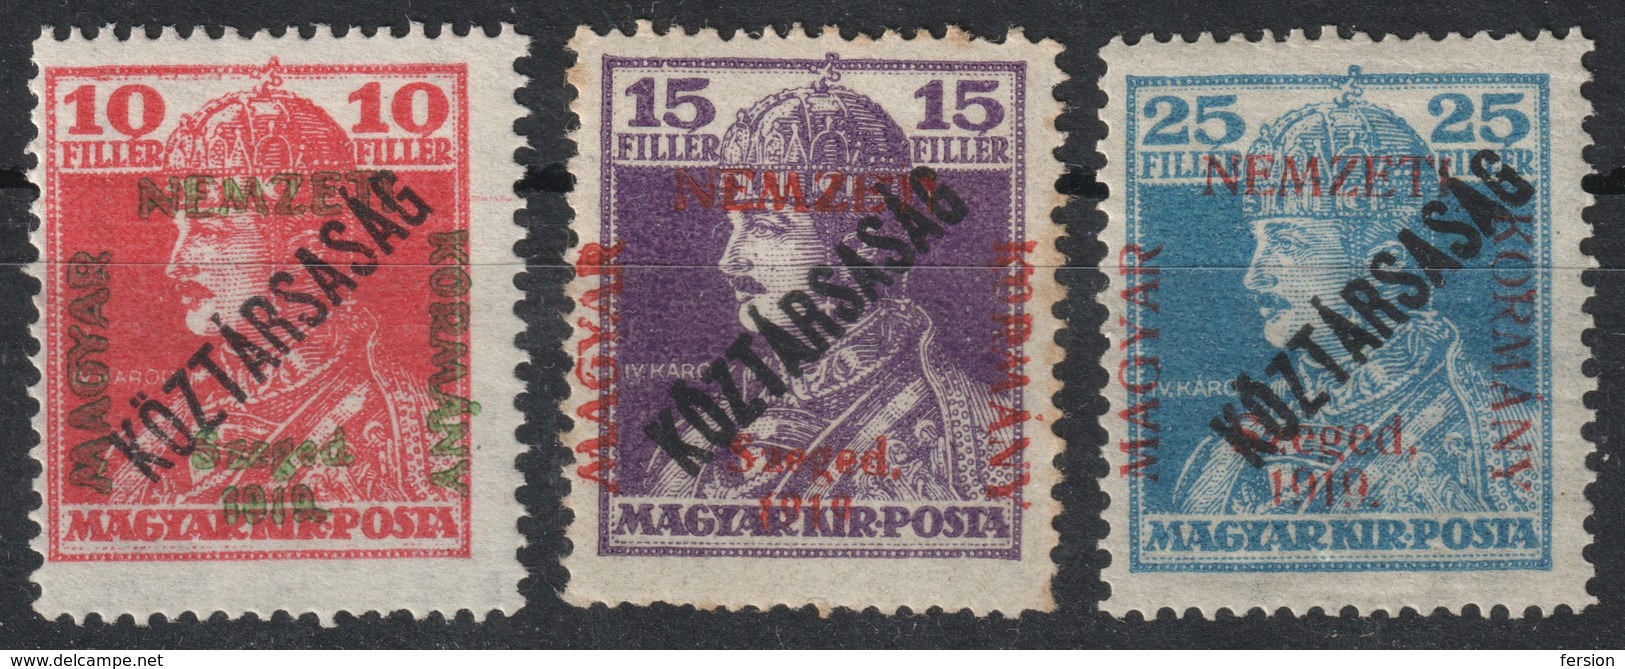 1919 France Occupation Local SZEGED - Hungary - KING Emperor Karl Charles Overprint - MNH LOT - Nuevos